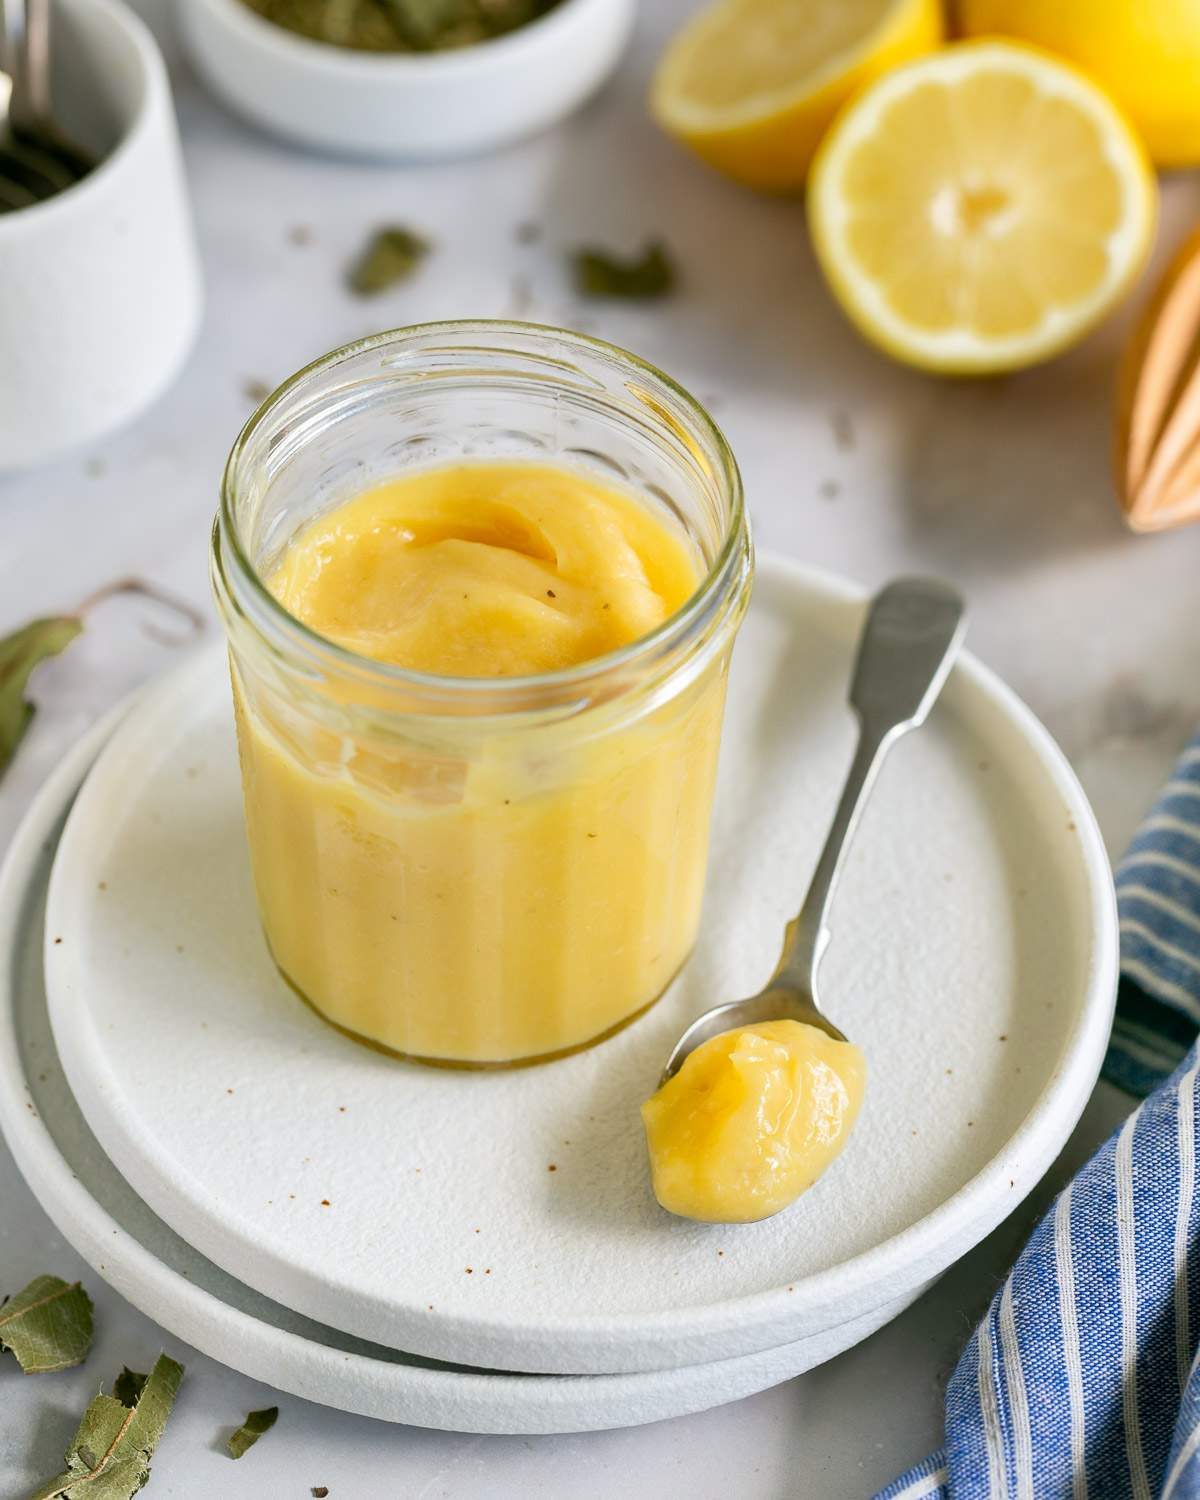 Creamy lemon curd